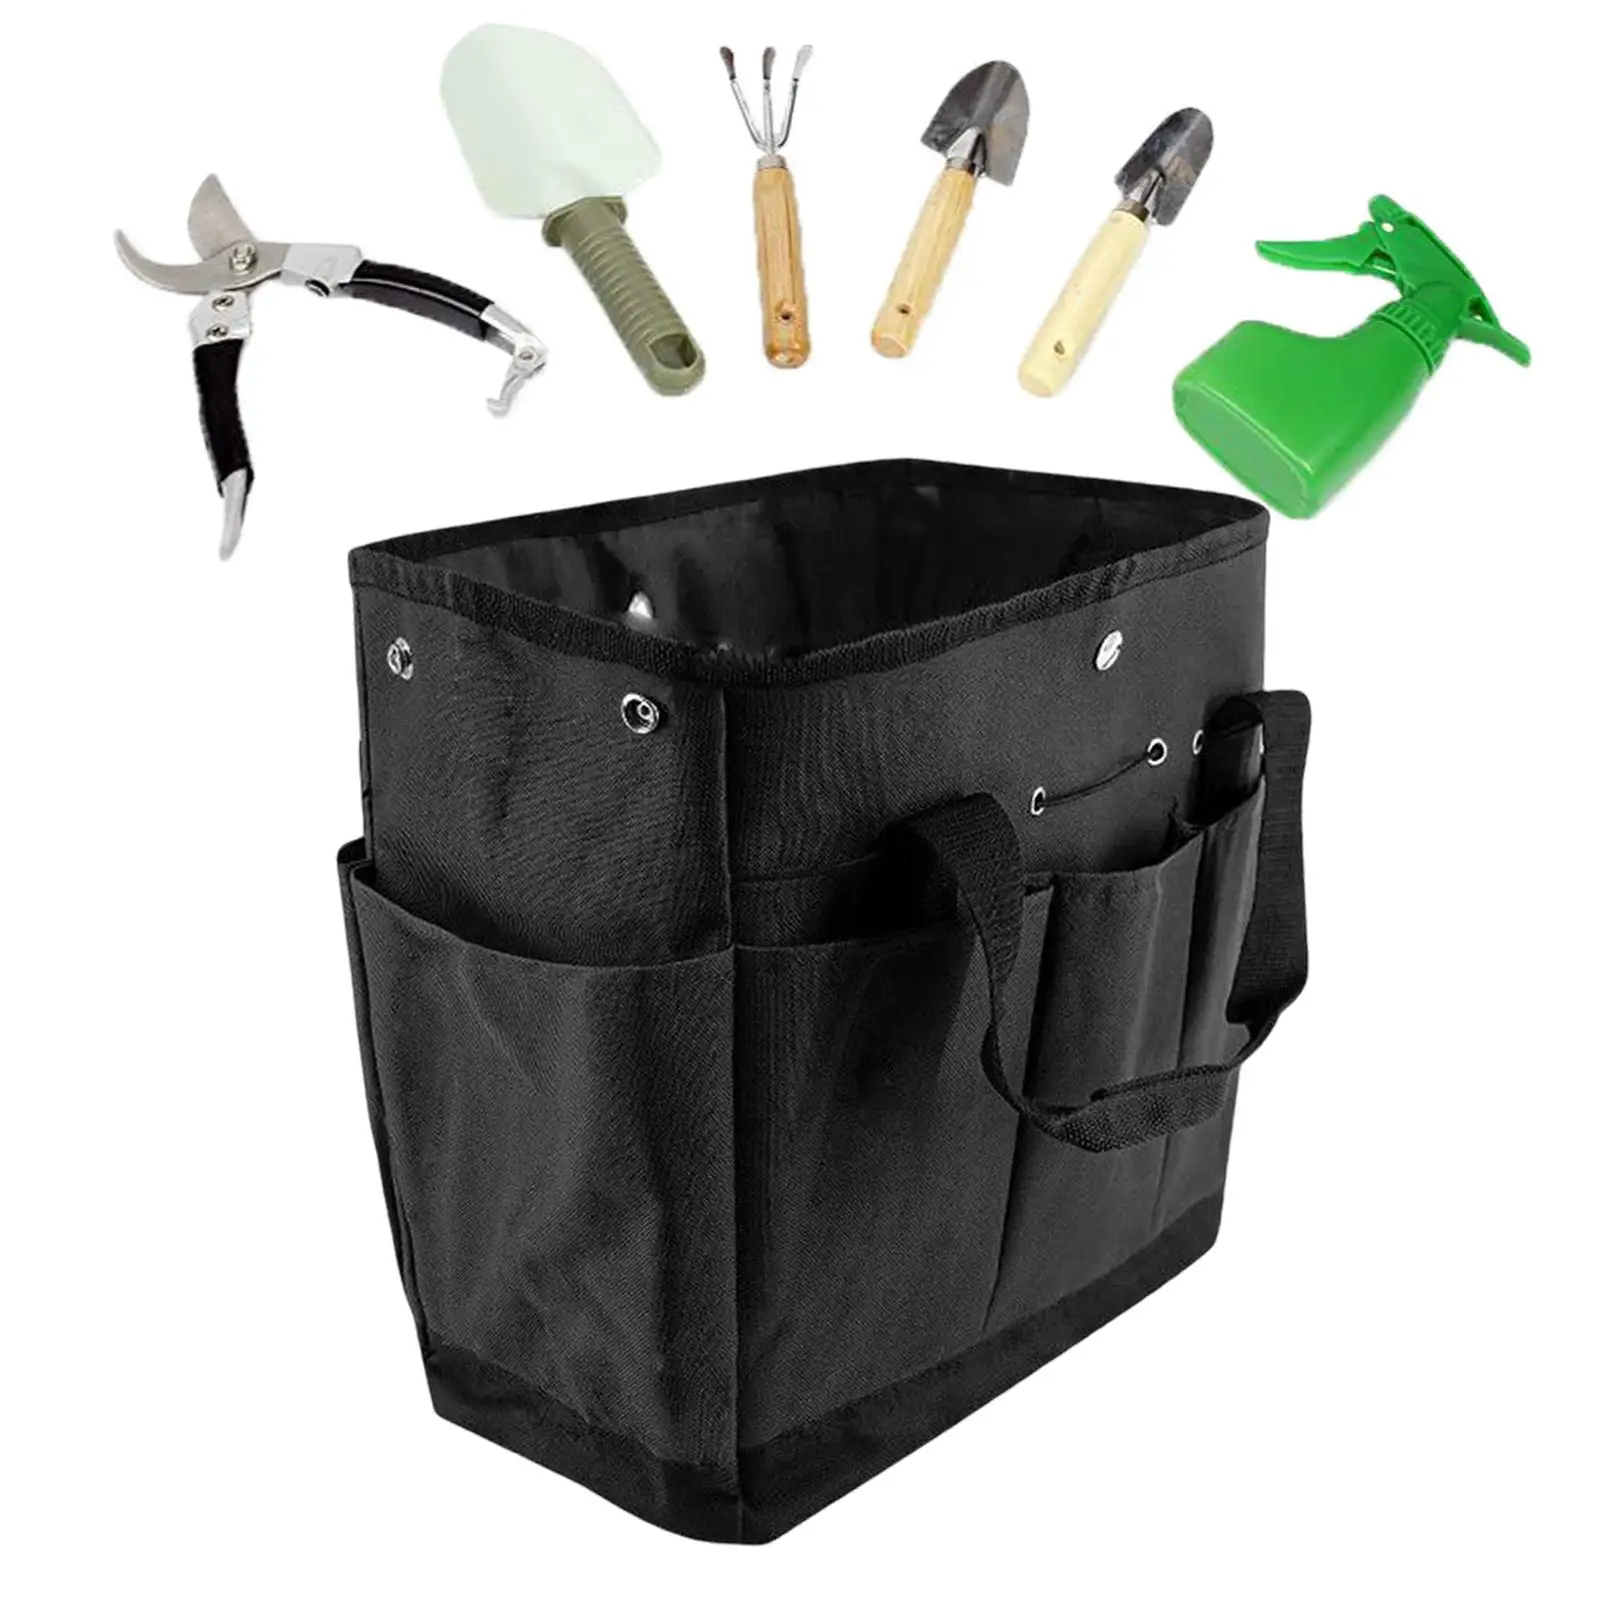 Heavy Duty Gardening Tool Kit Storage Bags Weaving Supplies Home Organizer Garden Tote Storage Bag for Holding Gardening Kit